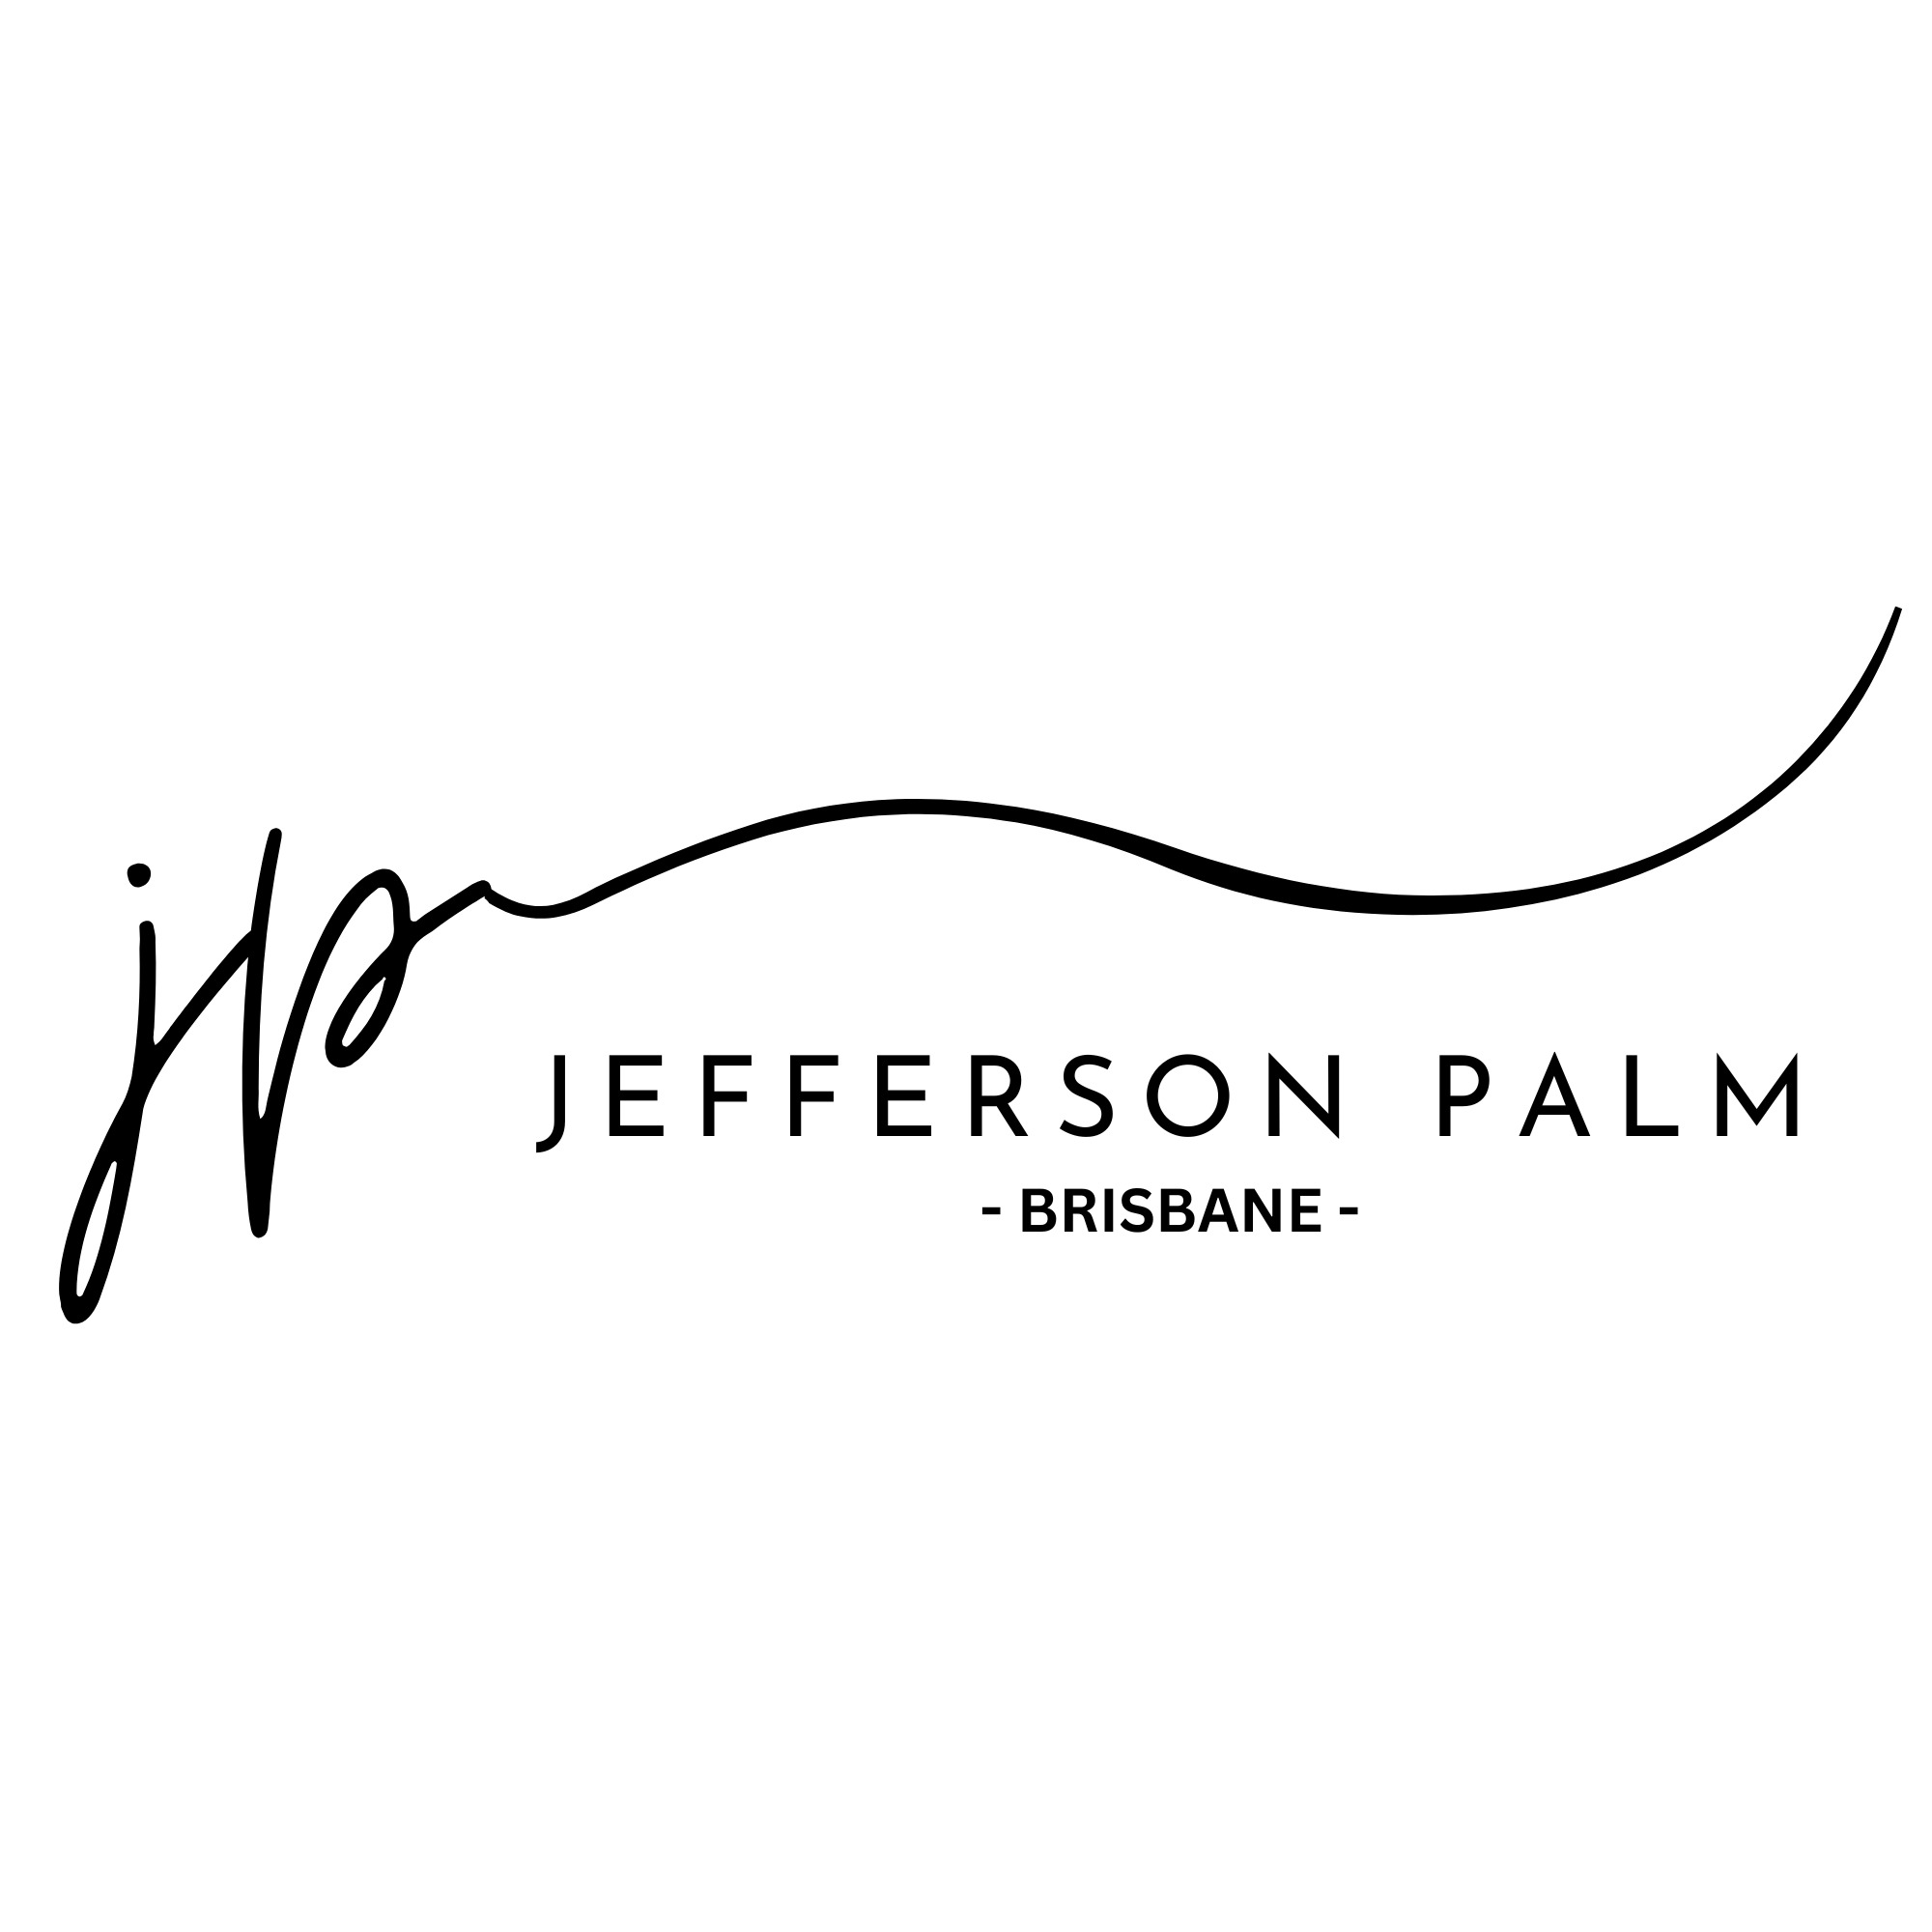 Jefferson Palm Brisbane